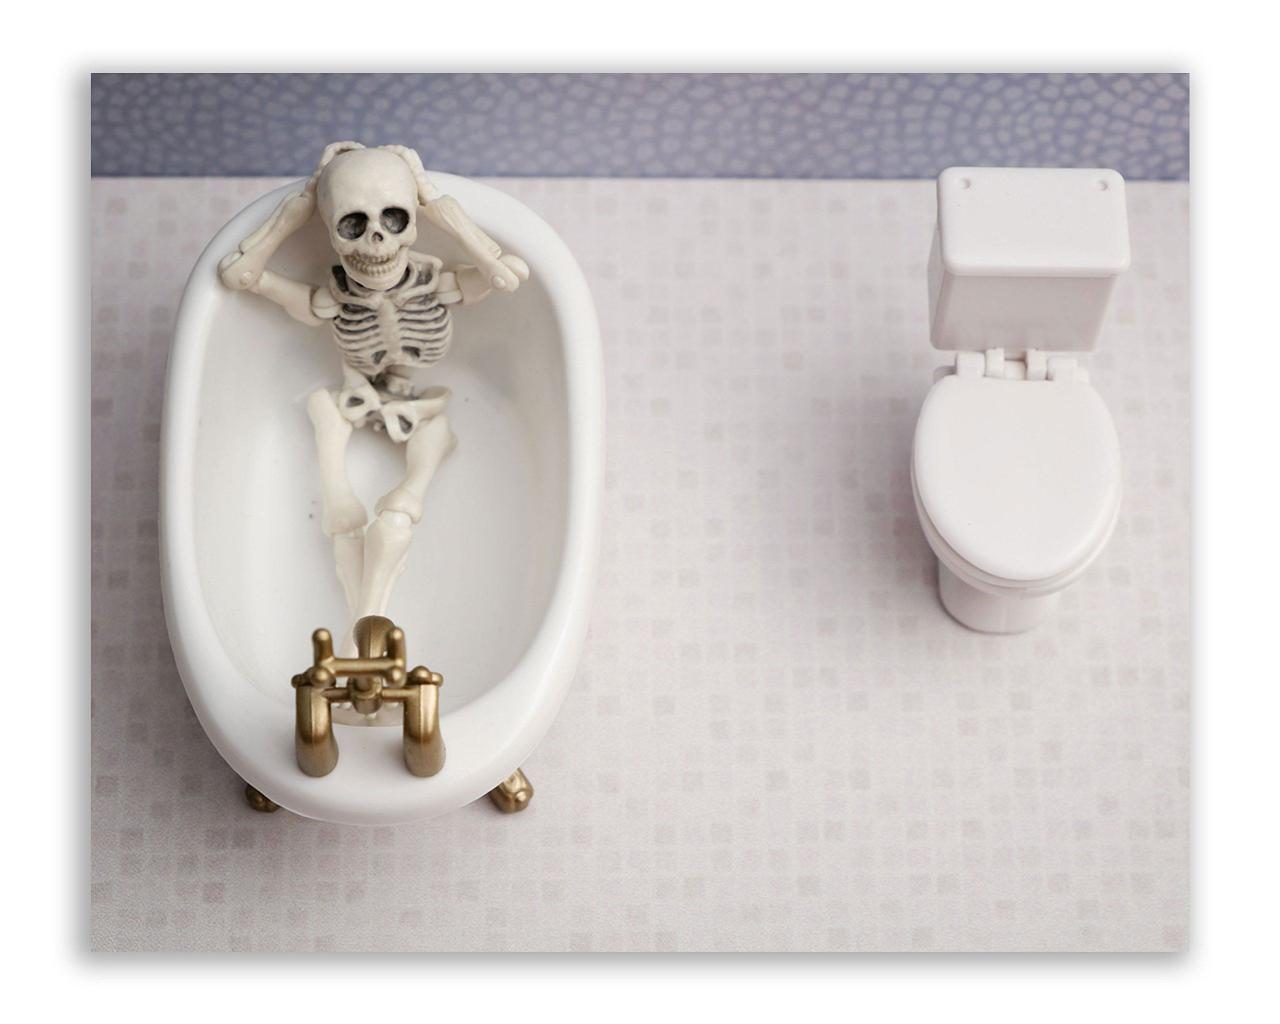 Skeleton Bathroom Prints Funny Hipster Skull and Bones Wall Art Decor